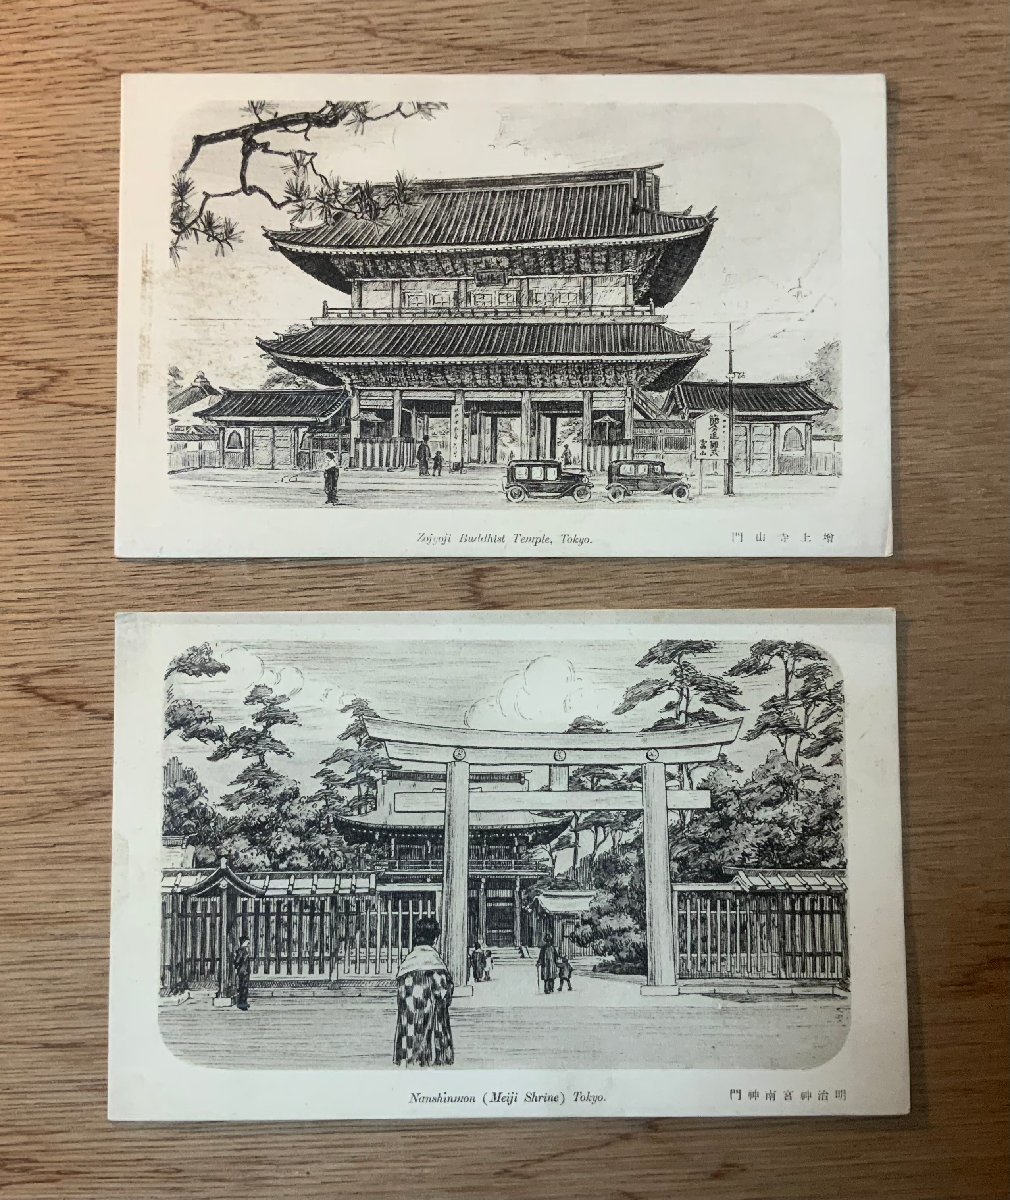 पीपी-1284 ■ निःशुल्क शिपिंग ■ टोक्यो ज़ोजोजी मीजी श्राइन 2 पेंसिल चित्र तीर्थ मंदिर धर्म कला पेंटिंग चित्रण पुरानी कार पोस्टकार्ड फोटो मुद्रित सामग्री पुरानी फोटो/केएनएरा, बुक - पोस्ट, पोस्टकार्ड, पोस्टकार्ड, अन्य